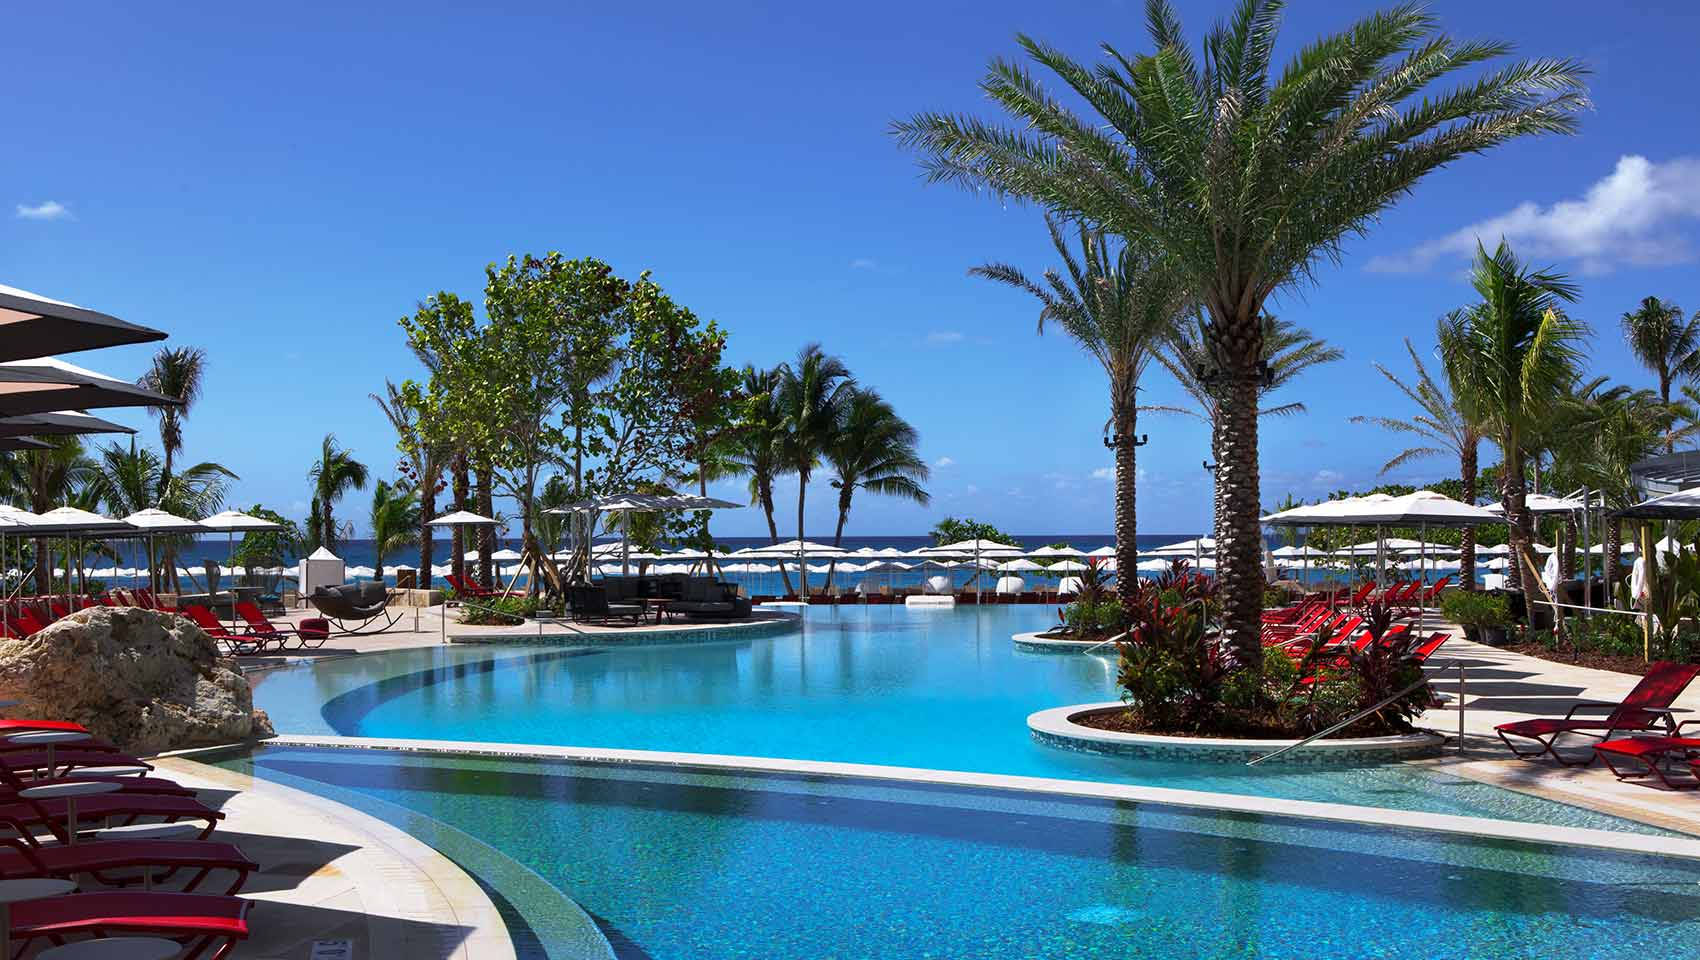 Cayman Island Resort And Spa Background